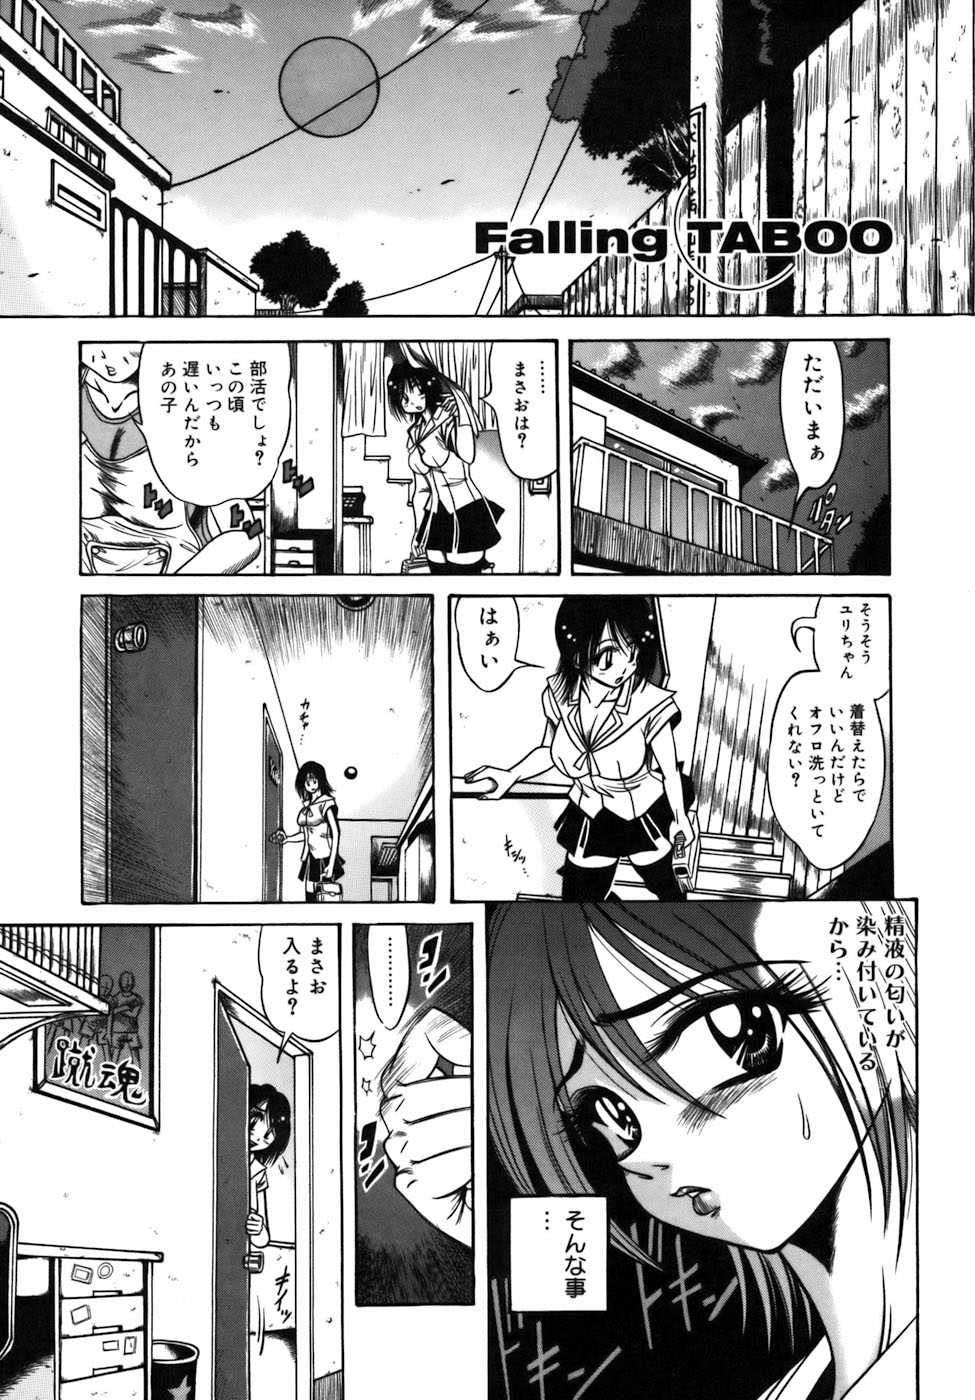 [Fukuryu] Falling TABOO 